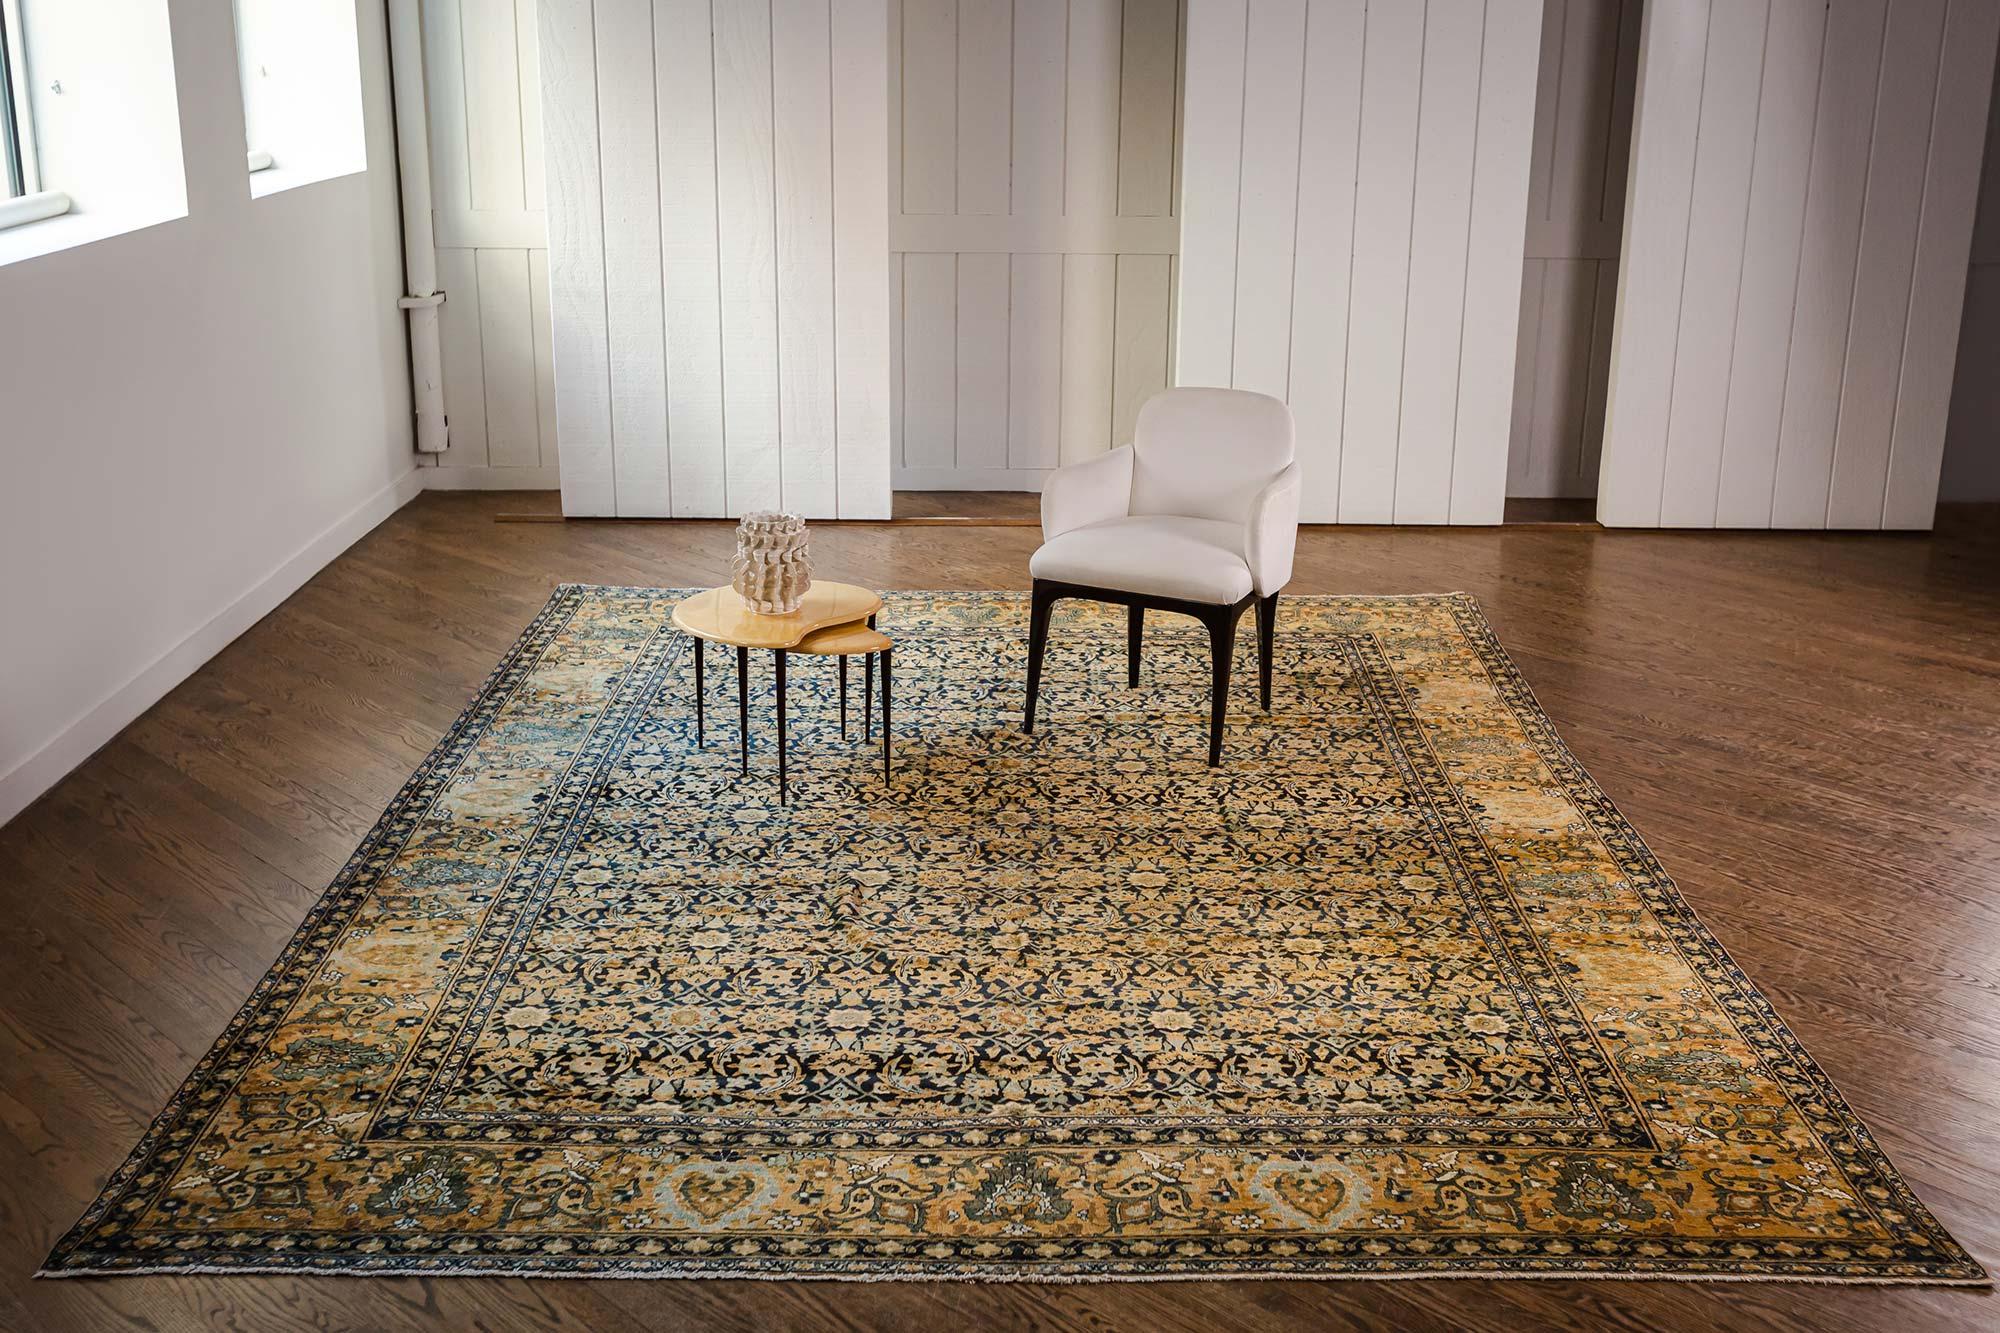 Early 20th century Persian Kirman botanic handwoven wool rug
Size: 9'0